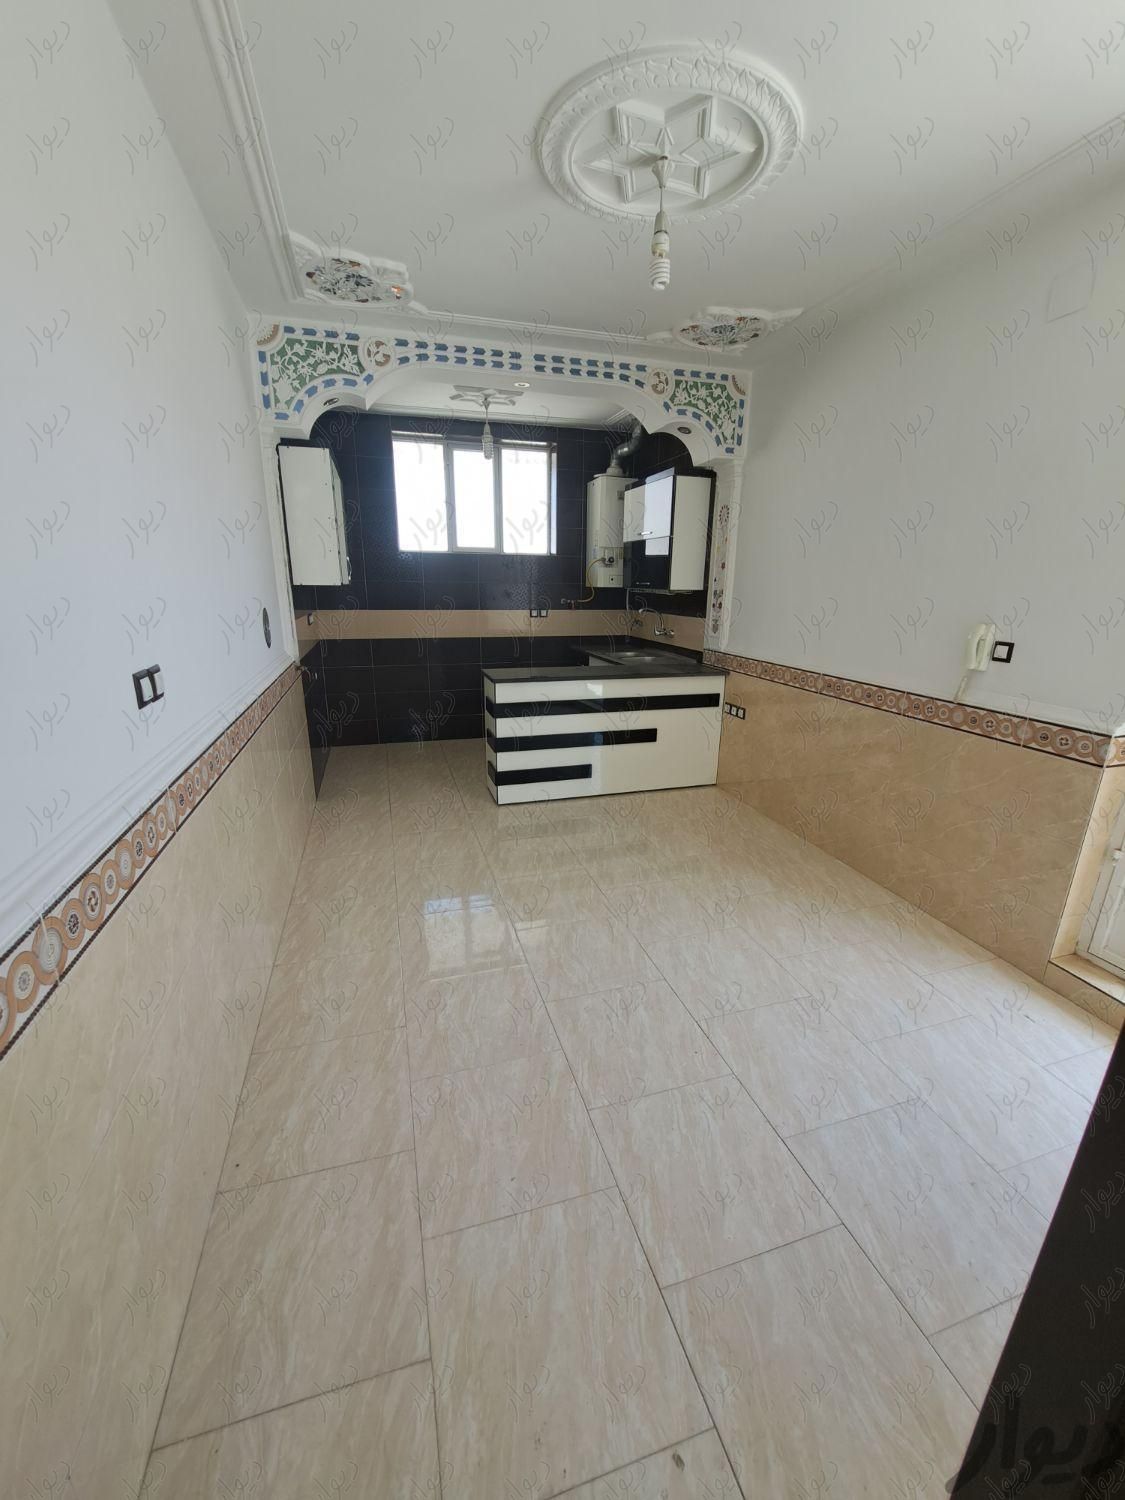 رهن کامل منزل شخصی|اجارهٔ خانه و ویلا|شیراز, سهل‌آباد|دیوار